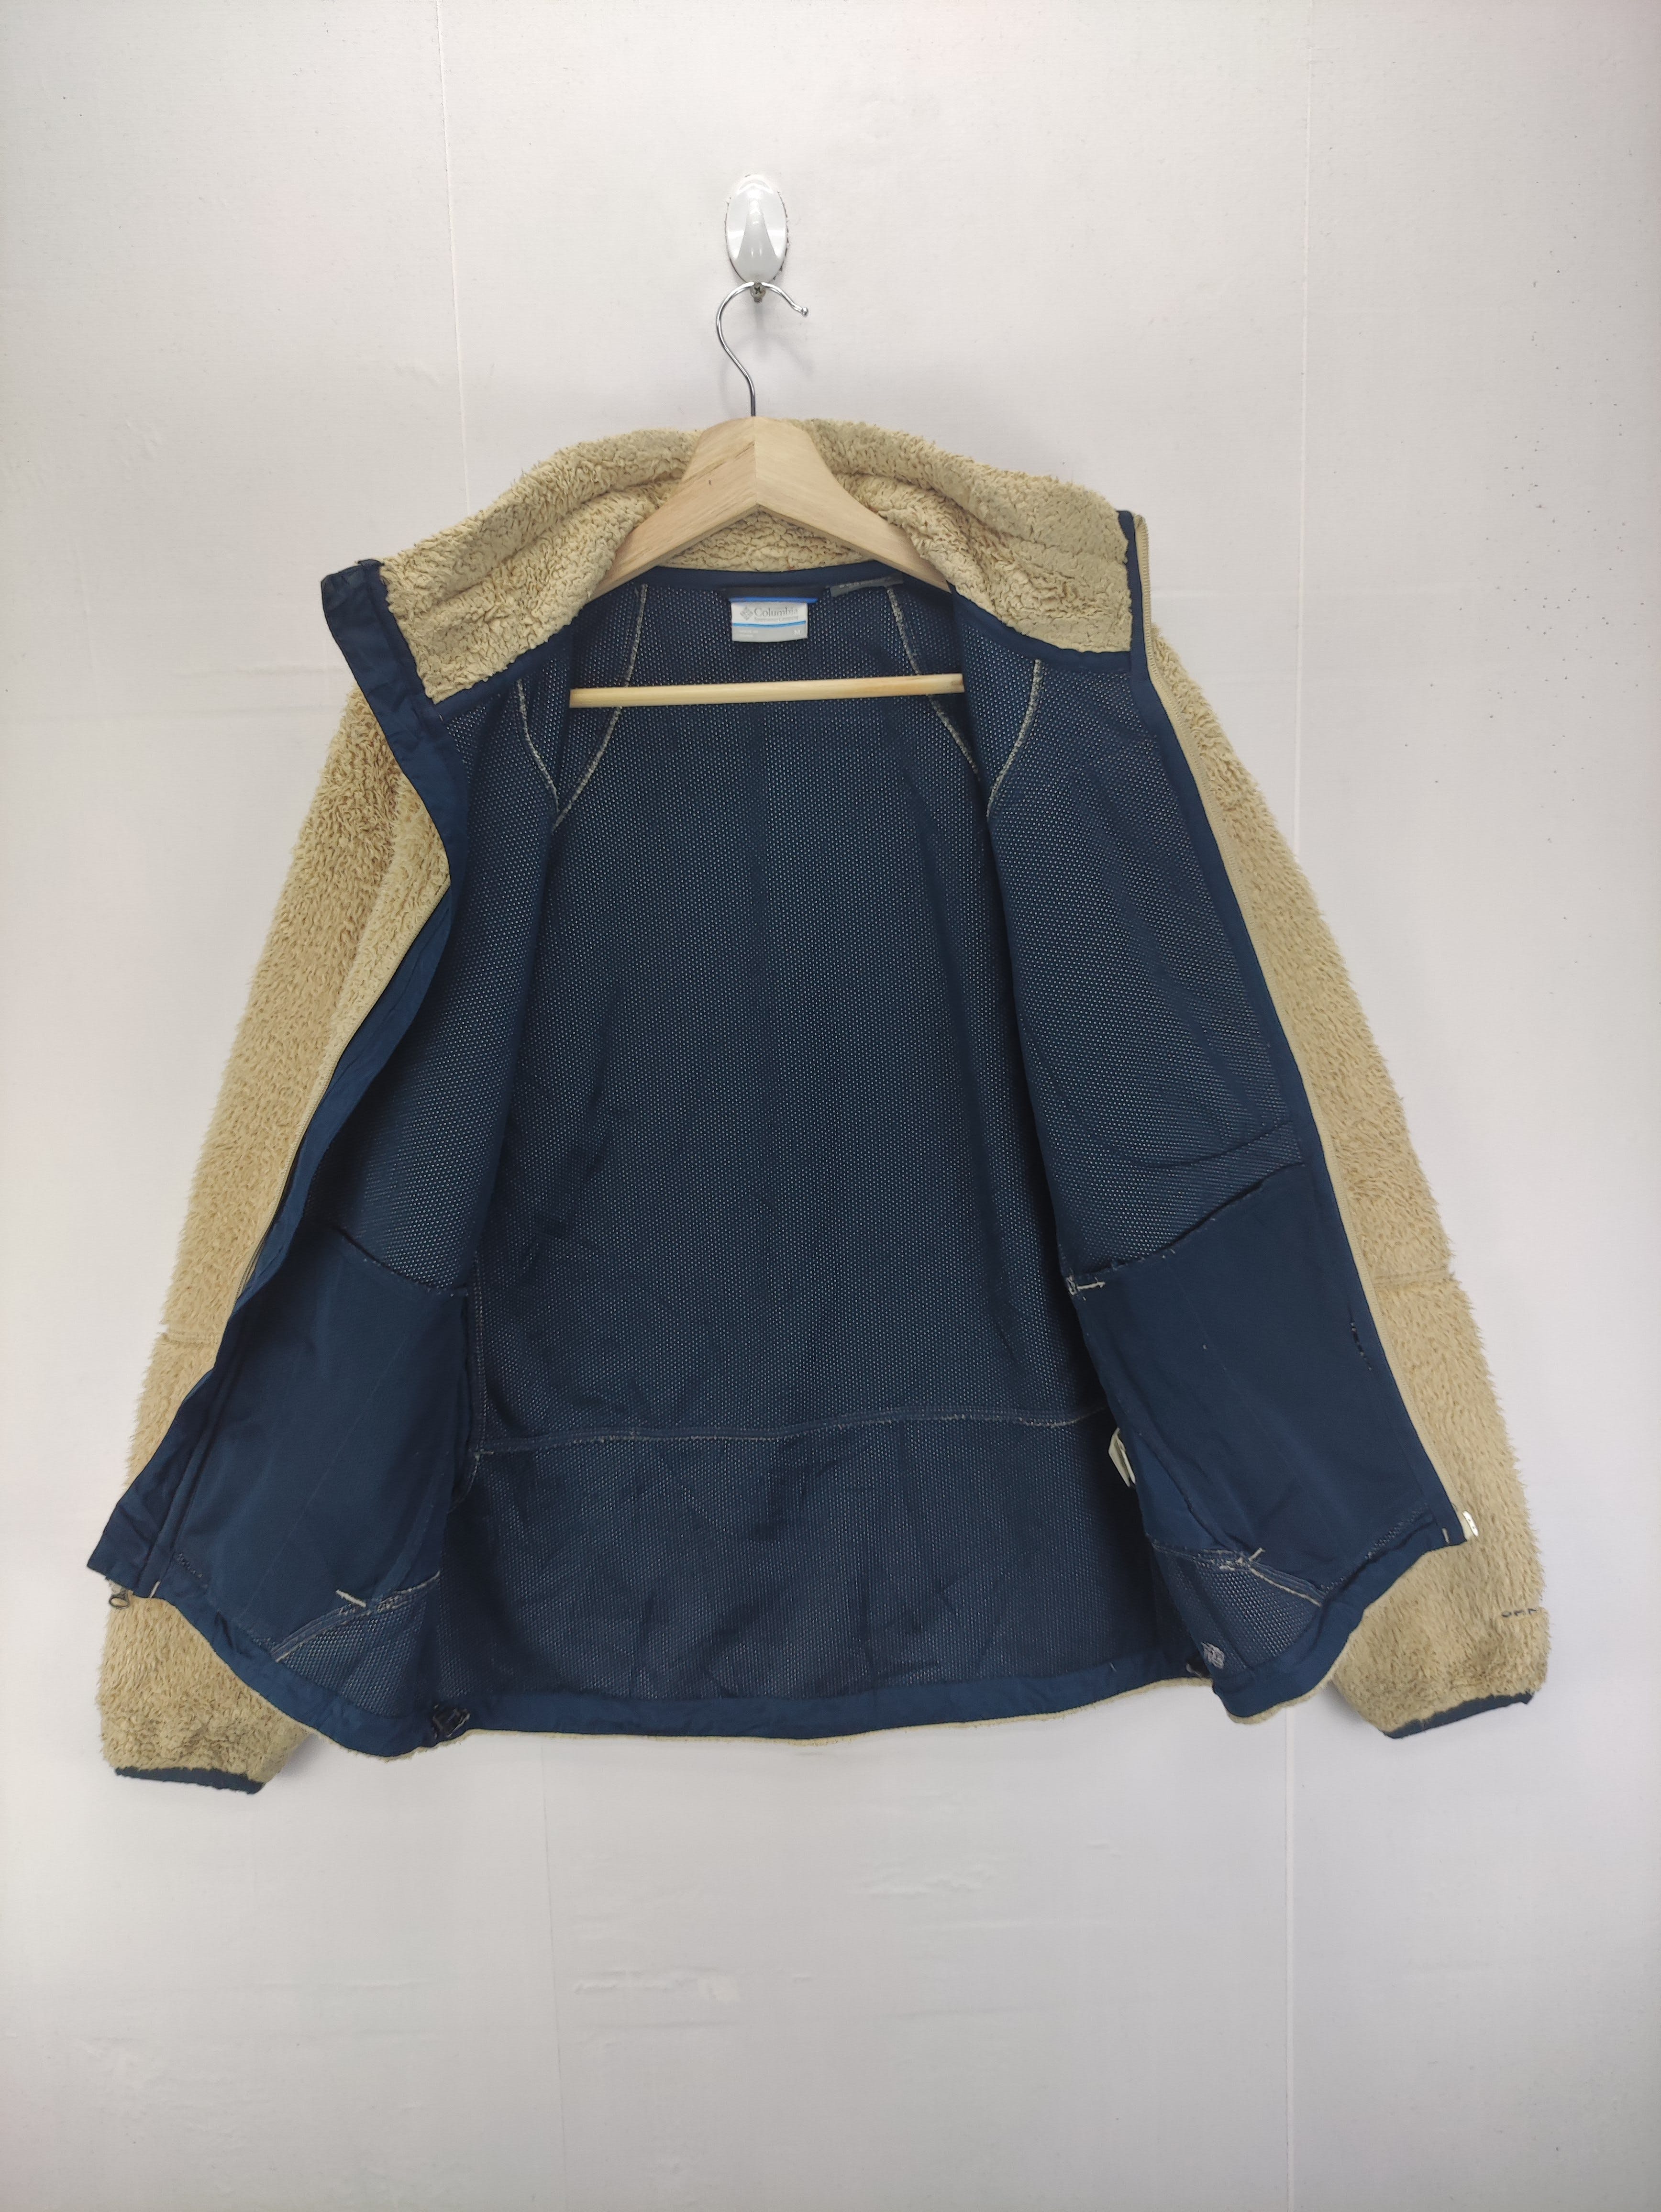 Vintage Columbia Sweater Jacket Zipper - 4